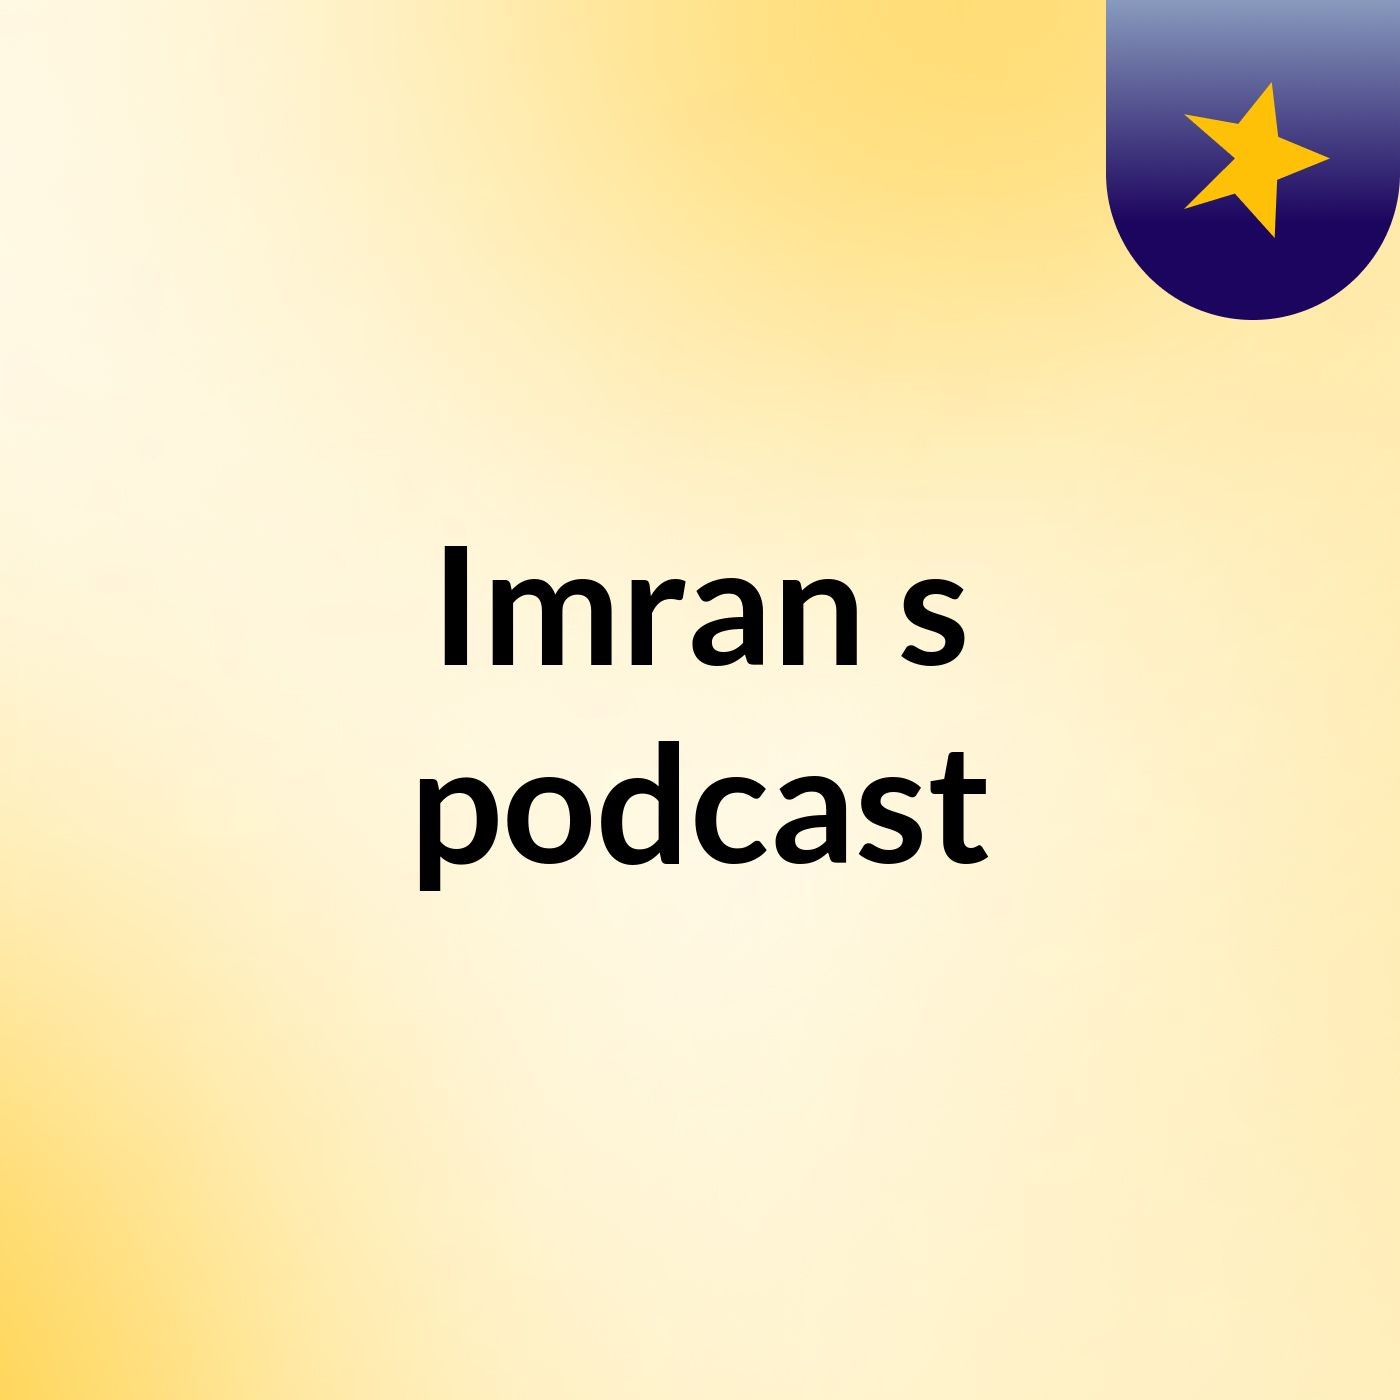 Imran's podcast